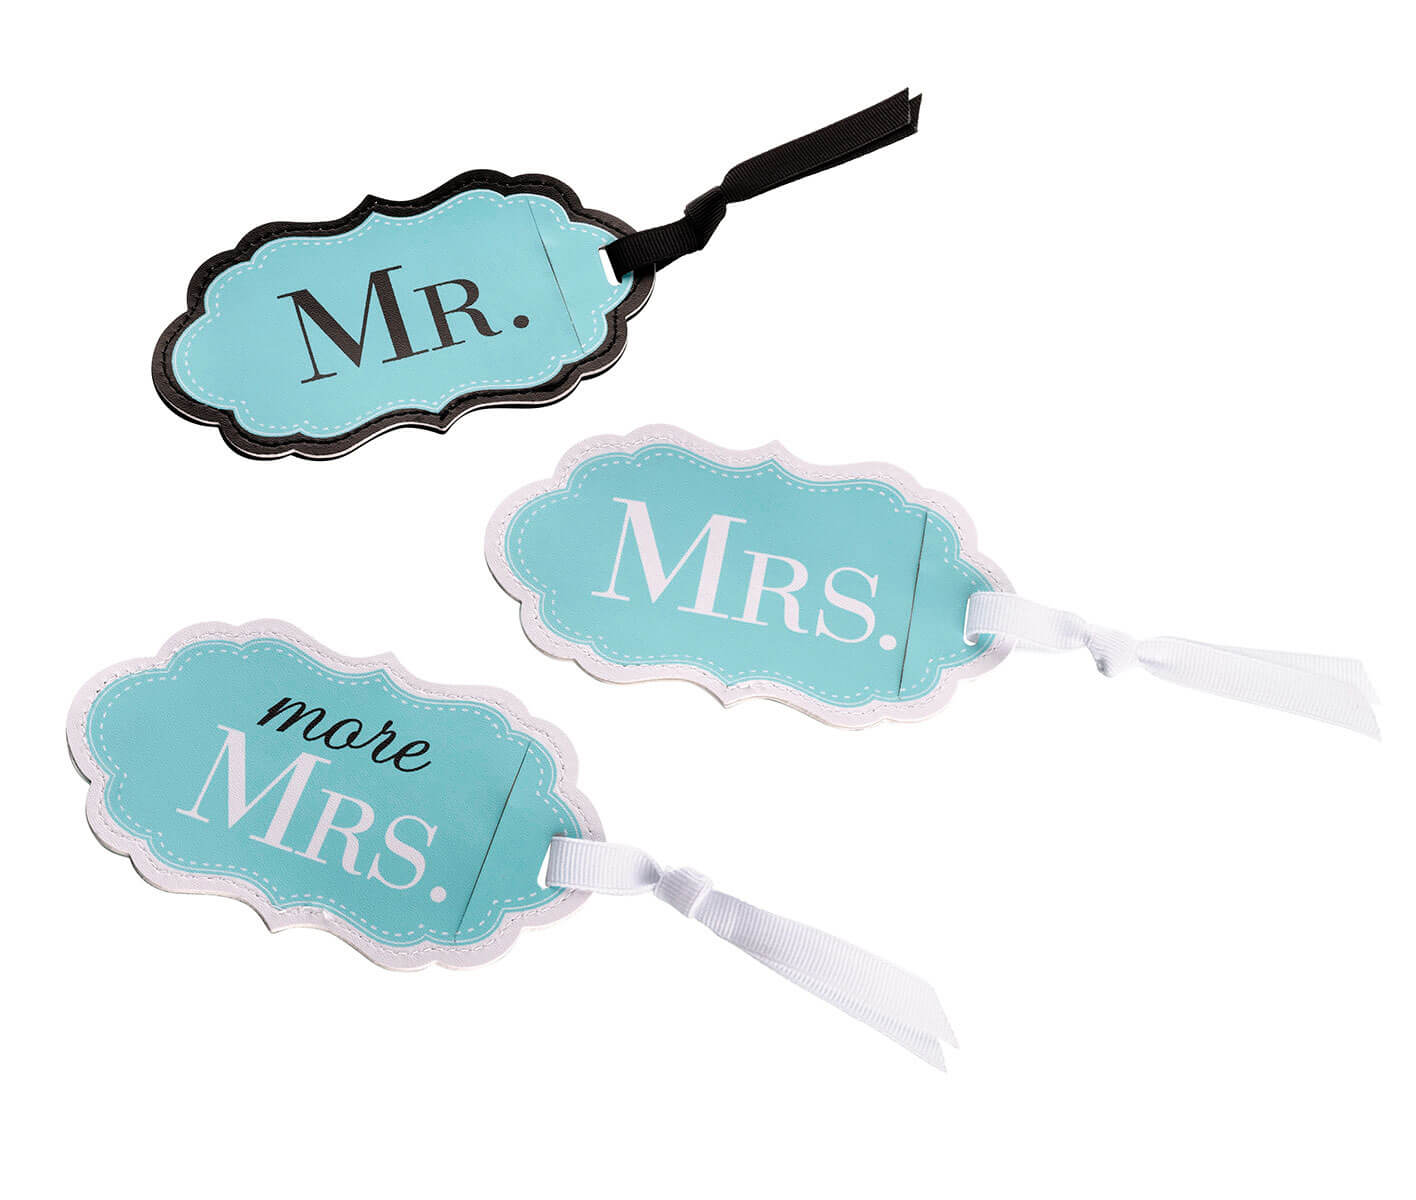 Mr. Mrs. and More Mrs. Aqua Luggage Tags